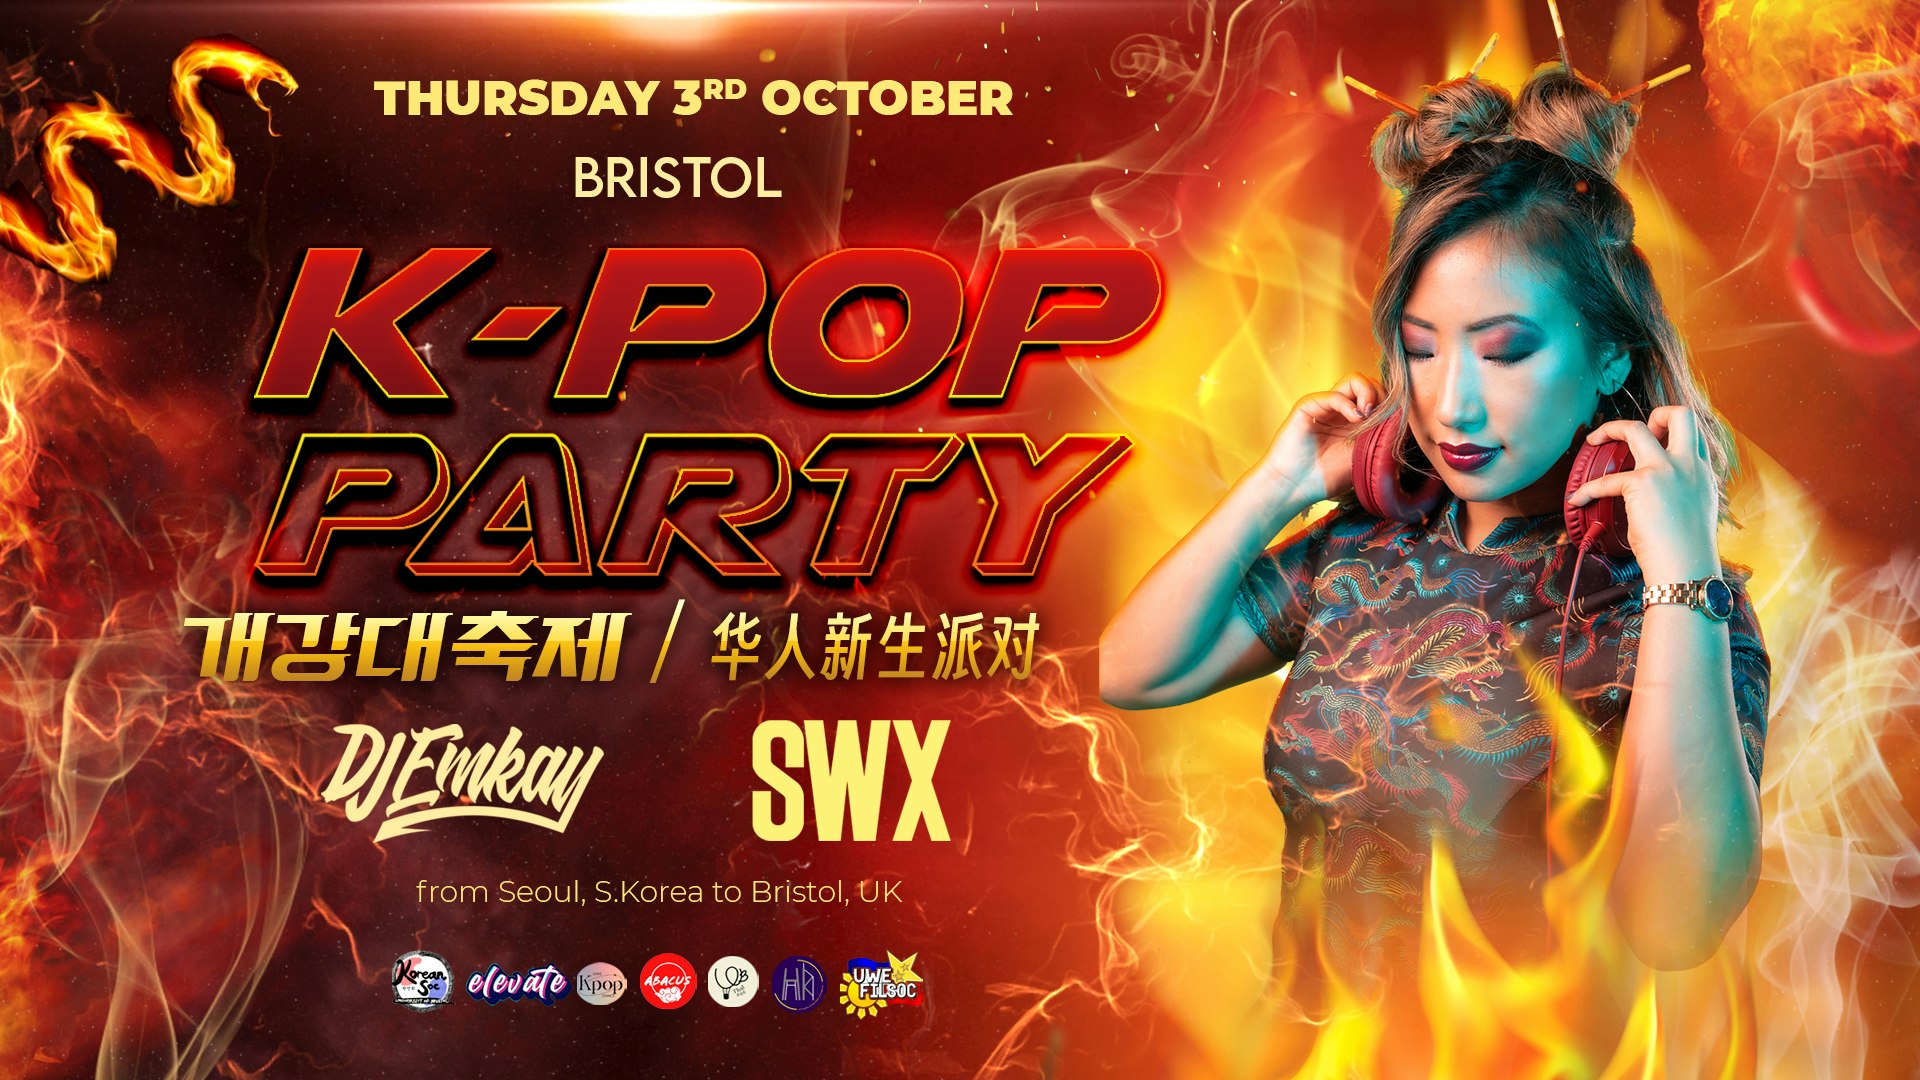 Bristol K-Pop Party – Fire Tour with DJ EMKAY | Thursday 3rd October